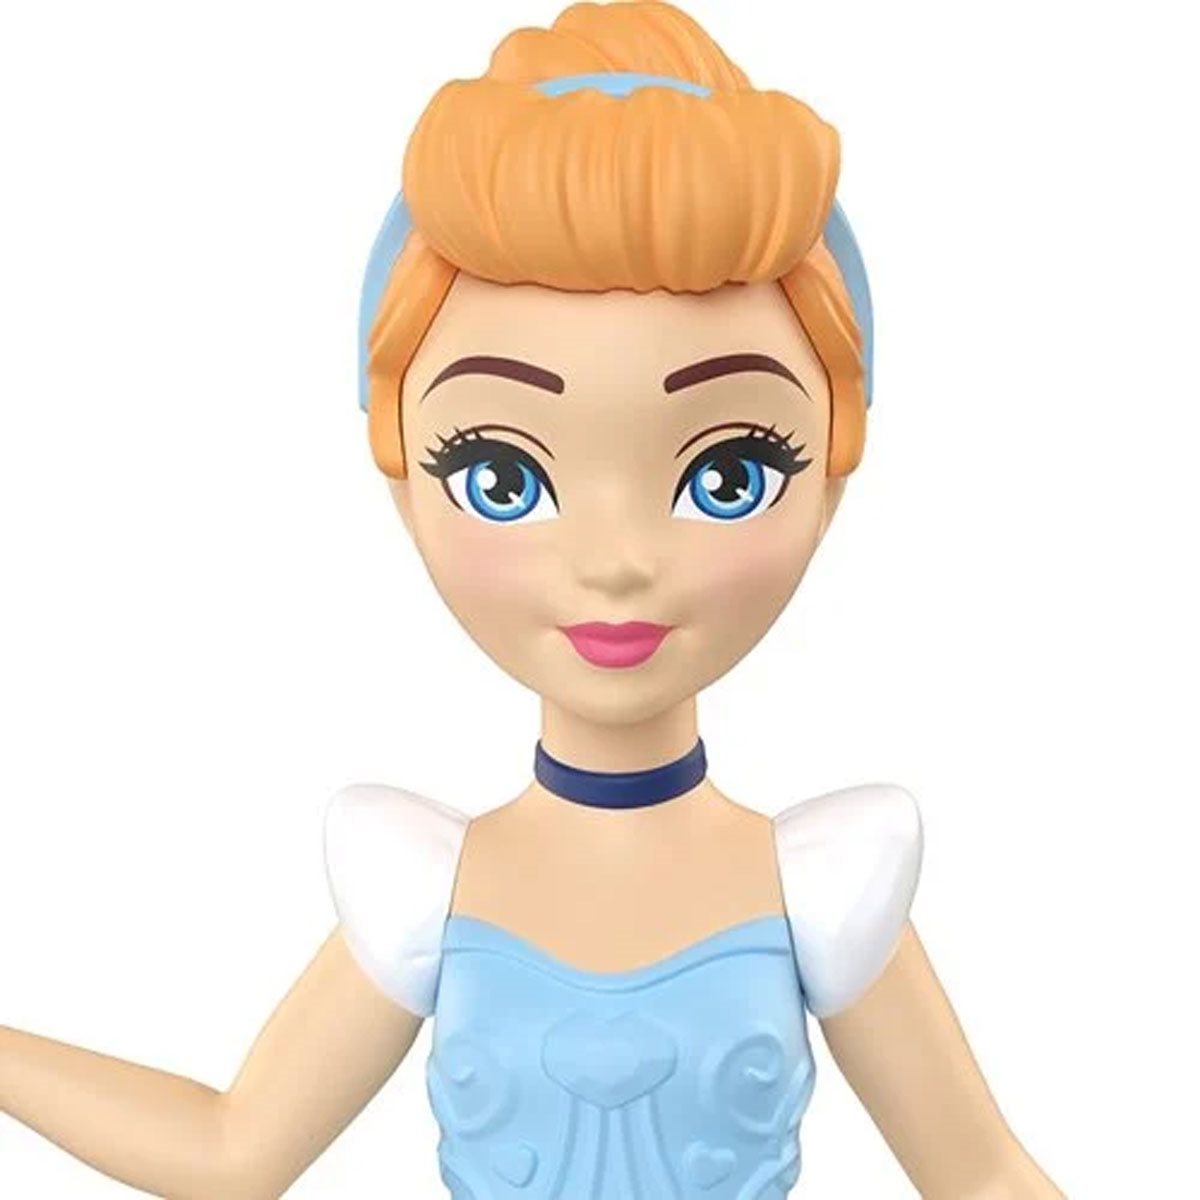 Disney Princess Cinderella Small Doll - Entertainment Earth